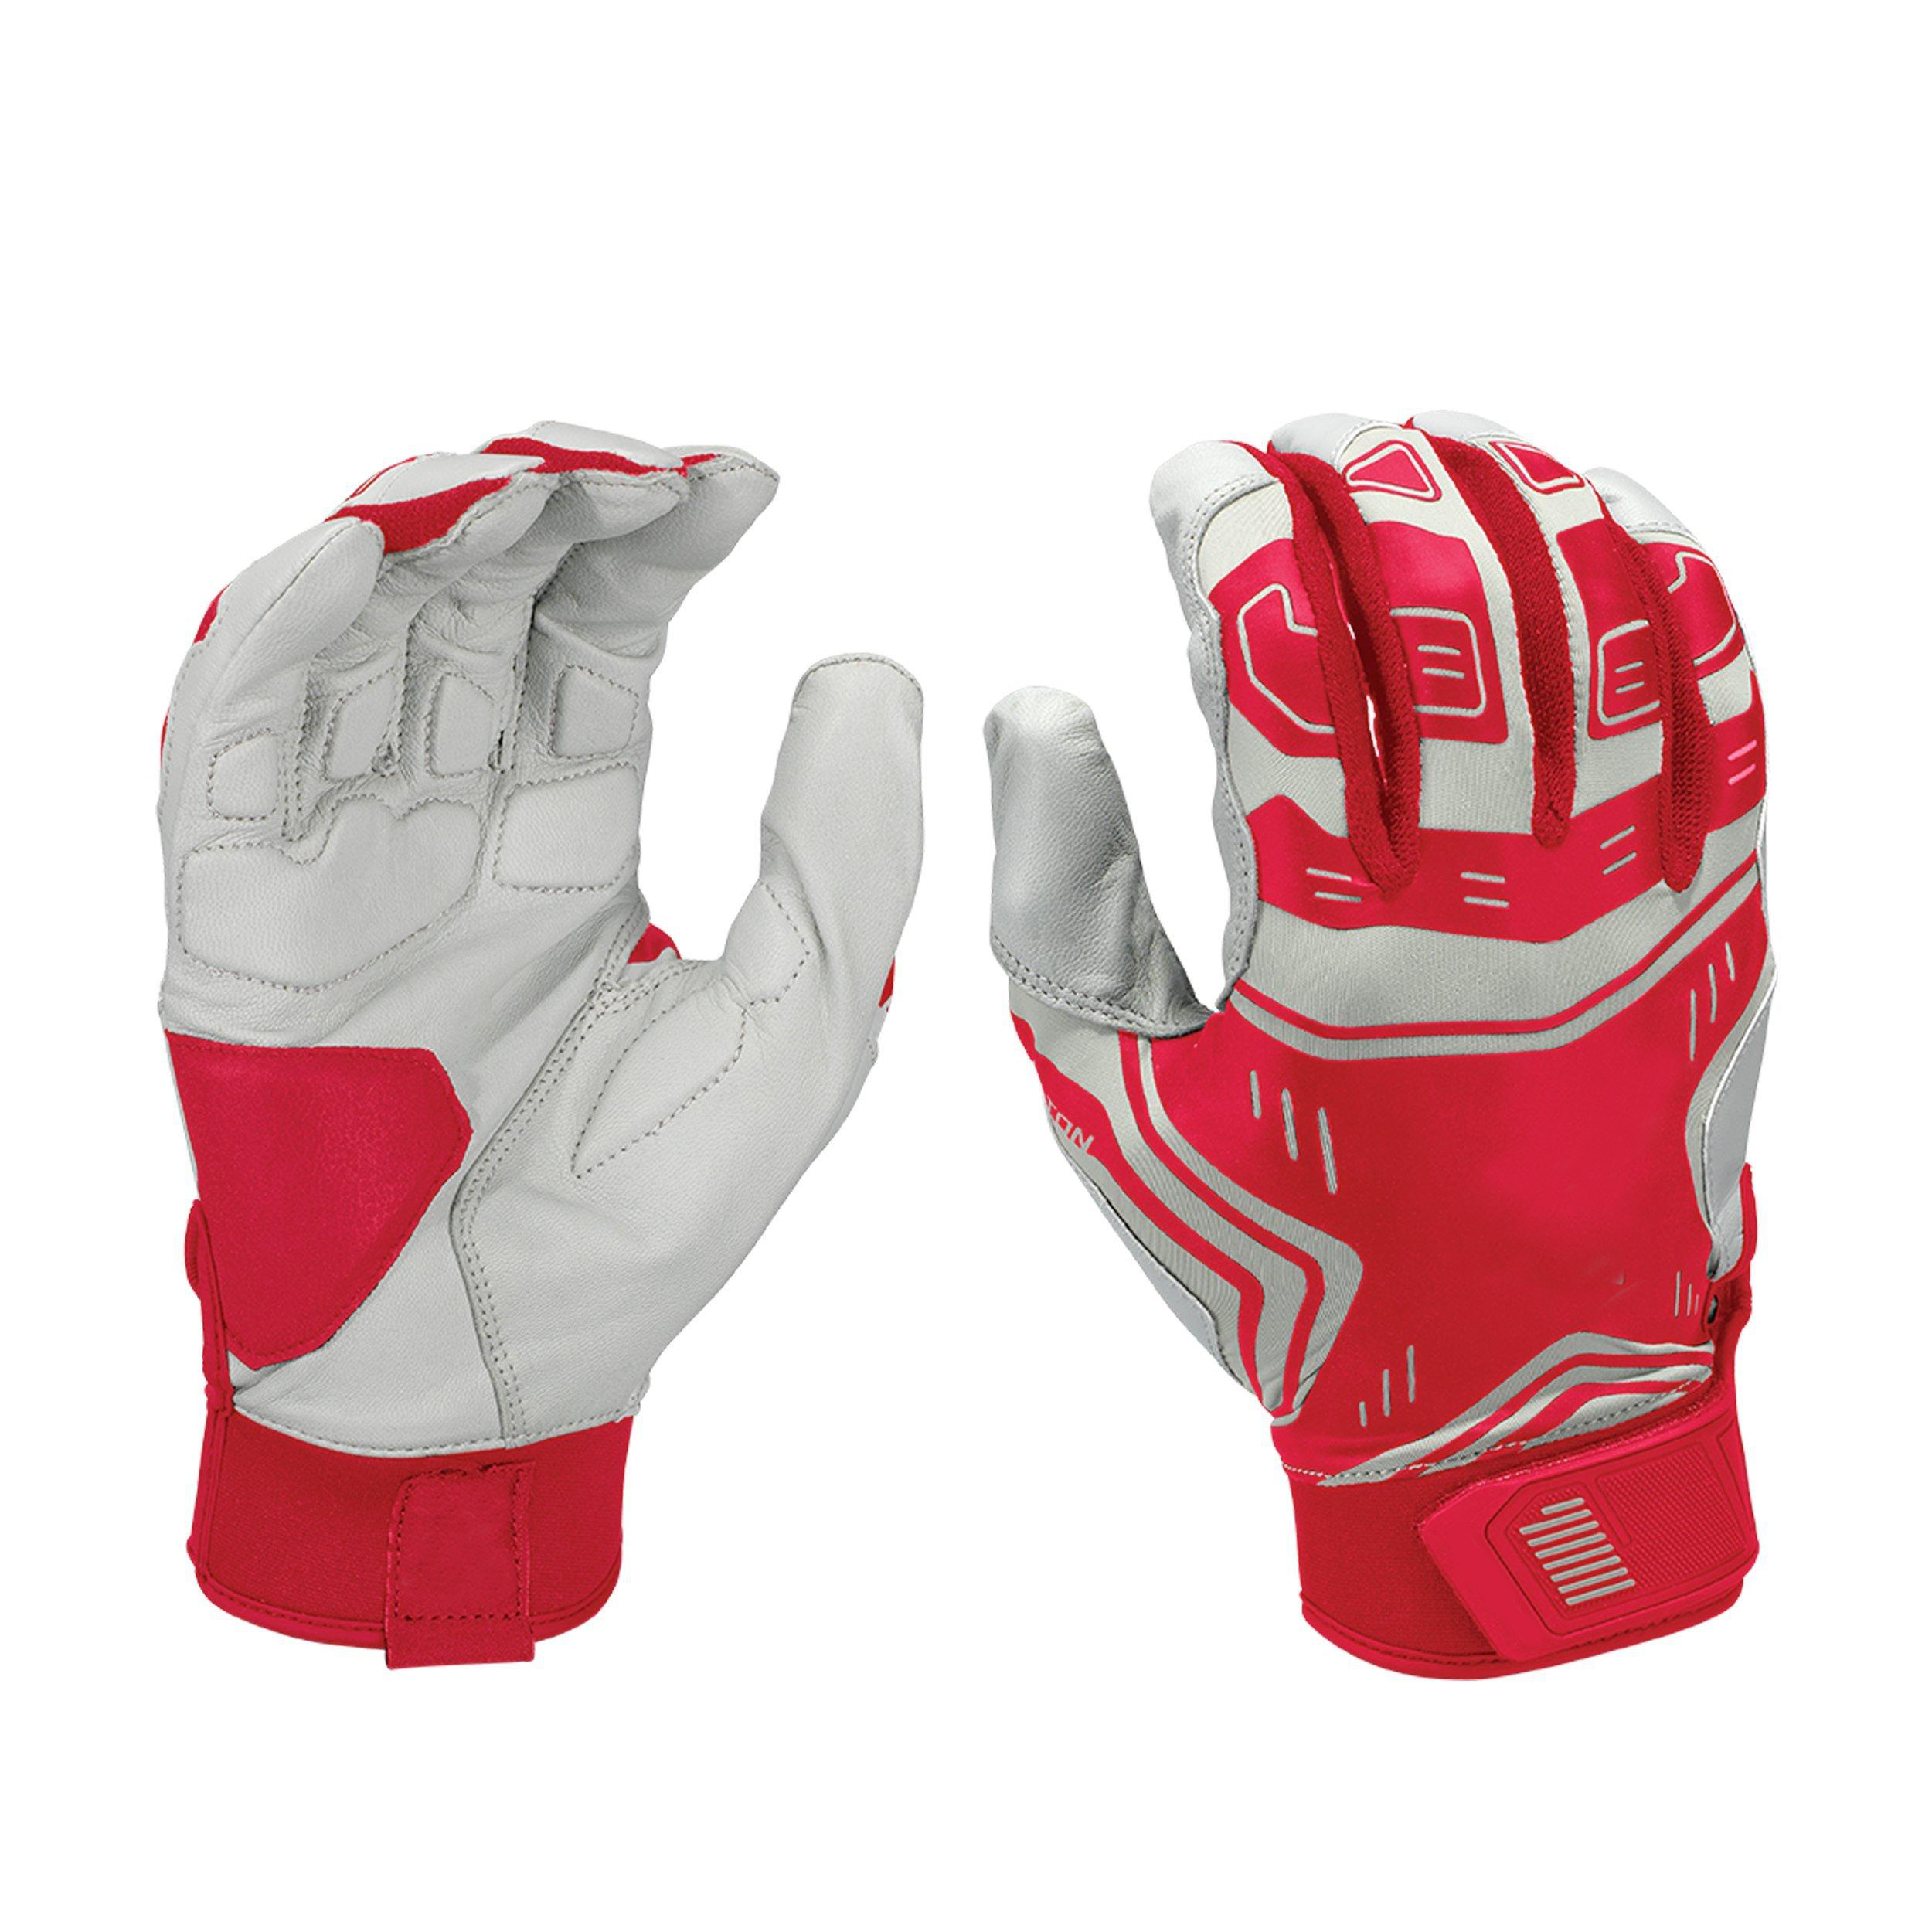 Professional red batting gloves goat leather batting gloves